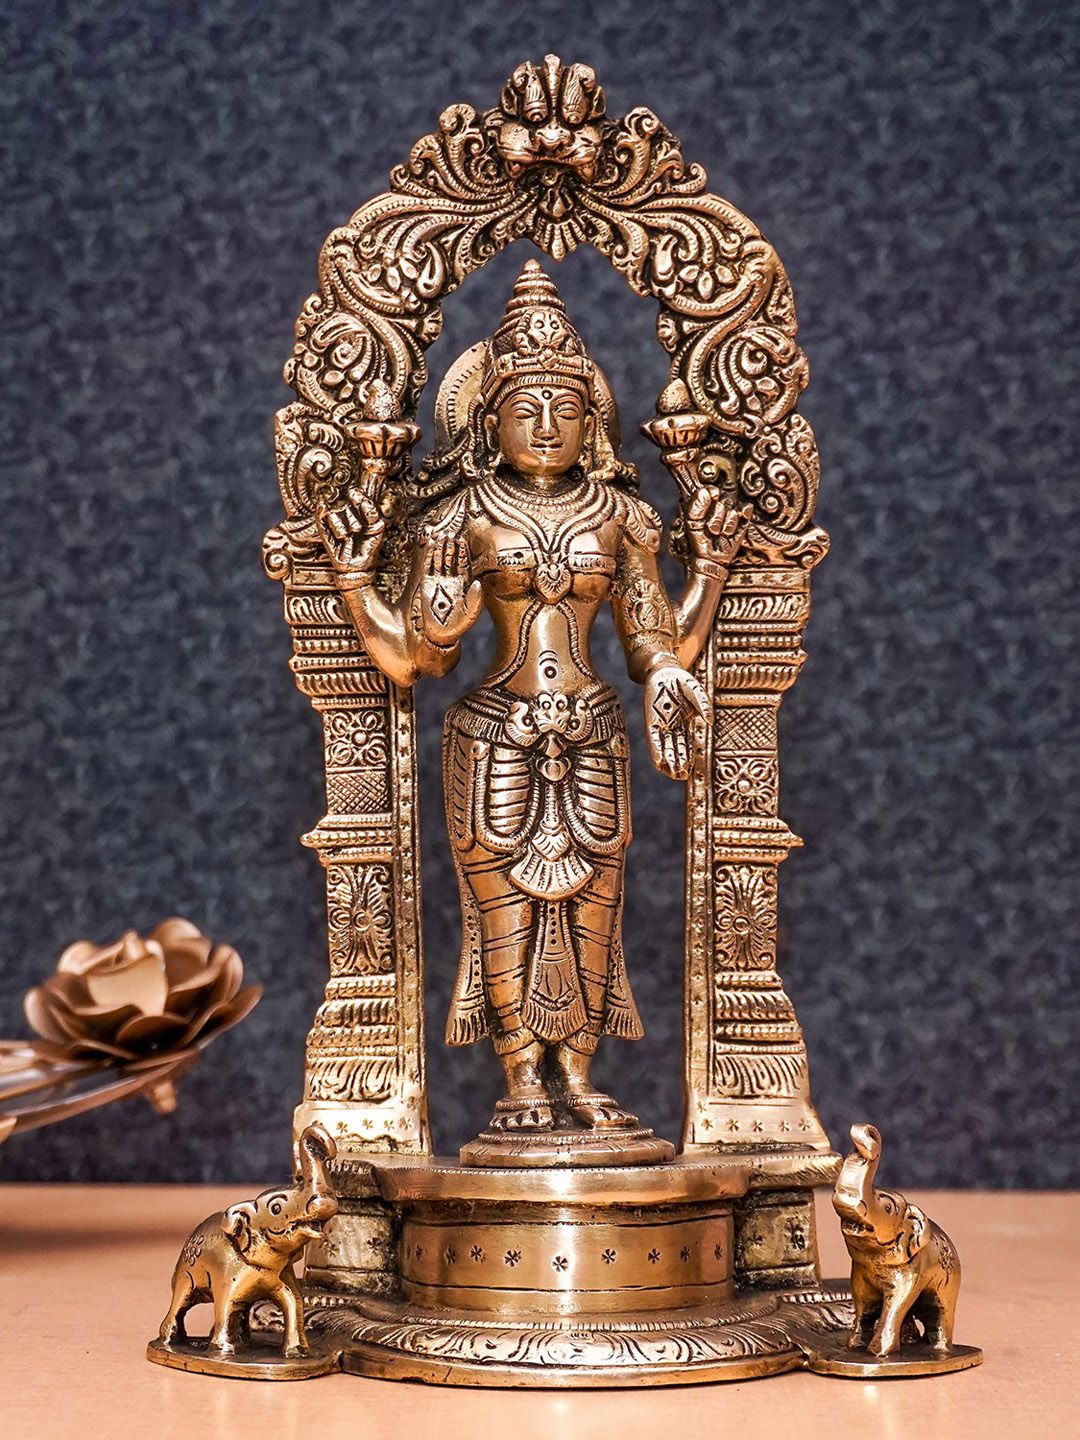 StatueStudio Gold-Toned Antique Lakshmi Idol Showpiece Price in India